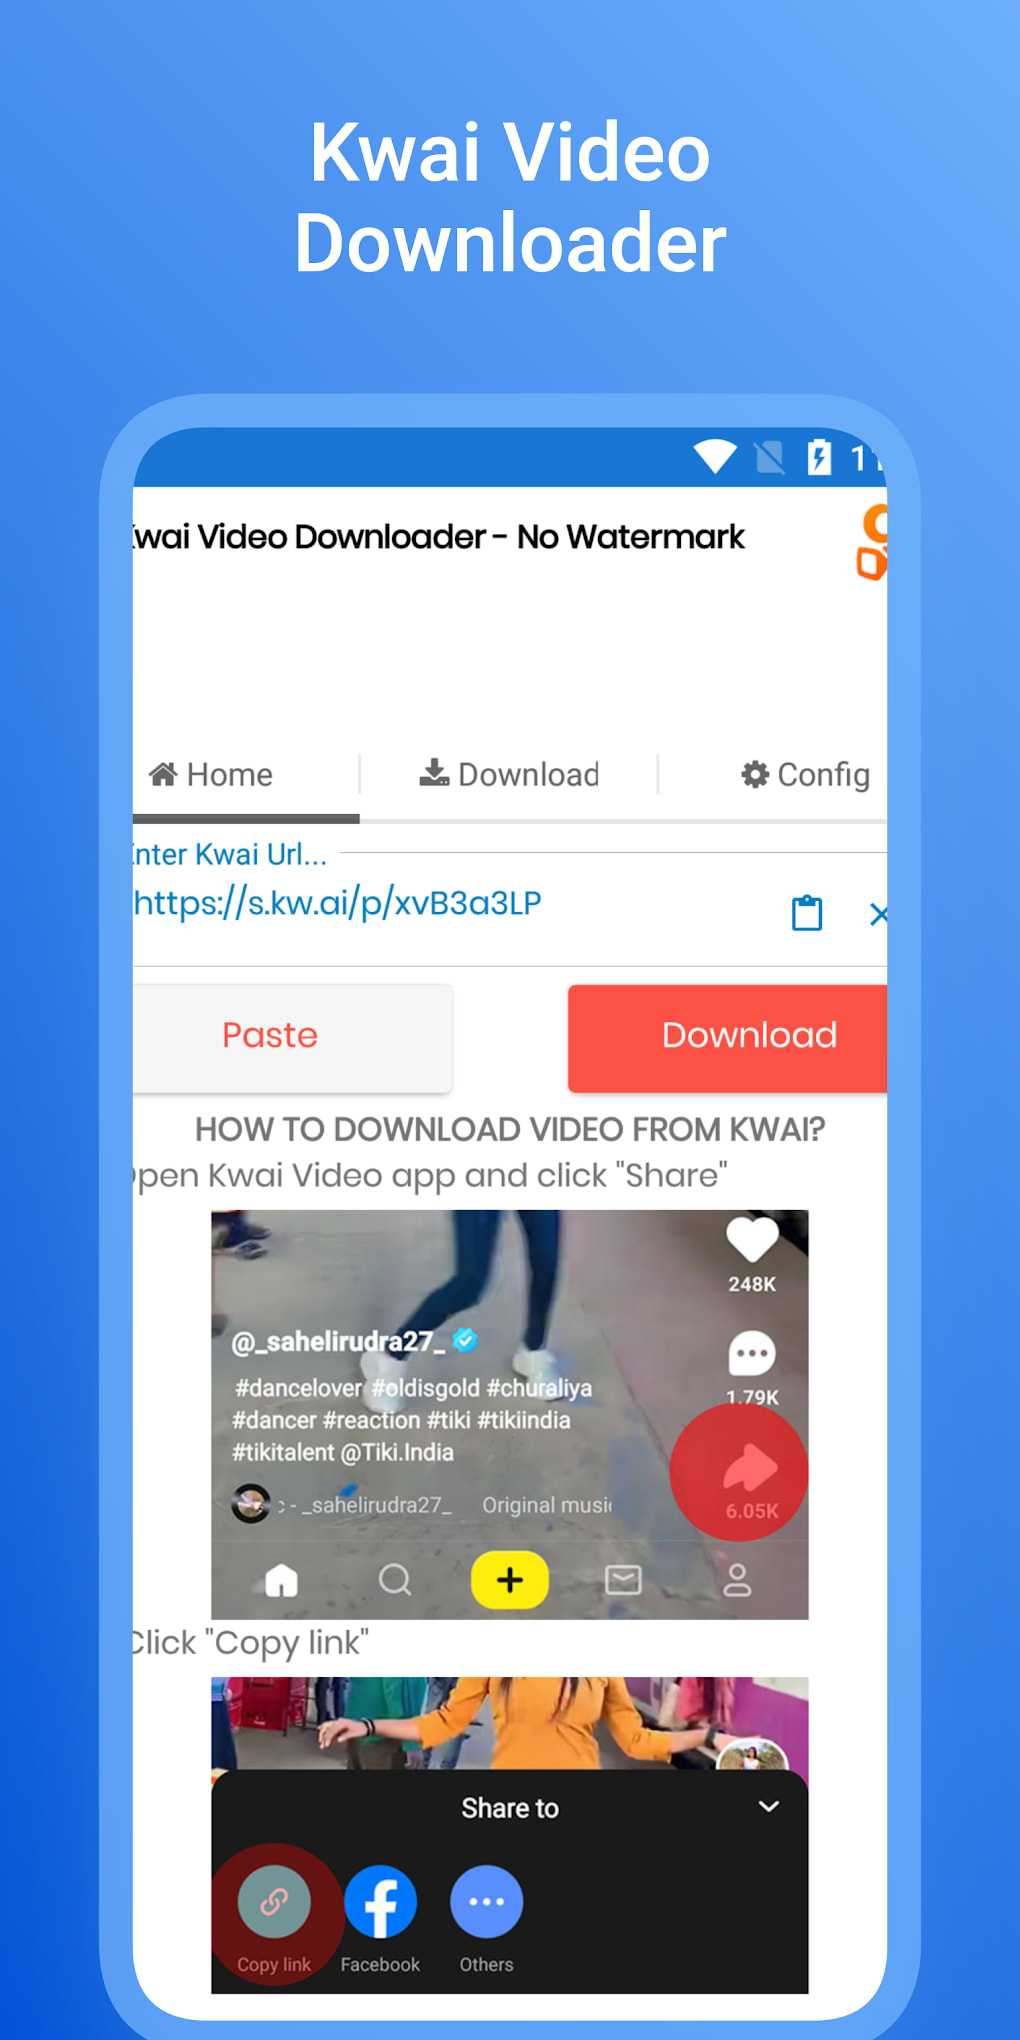 Kwai Livepartner APK (Android App) - Free Download